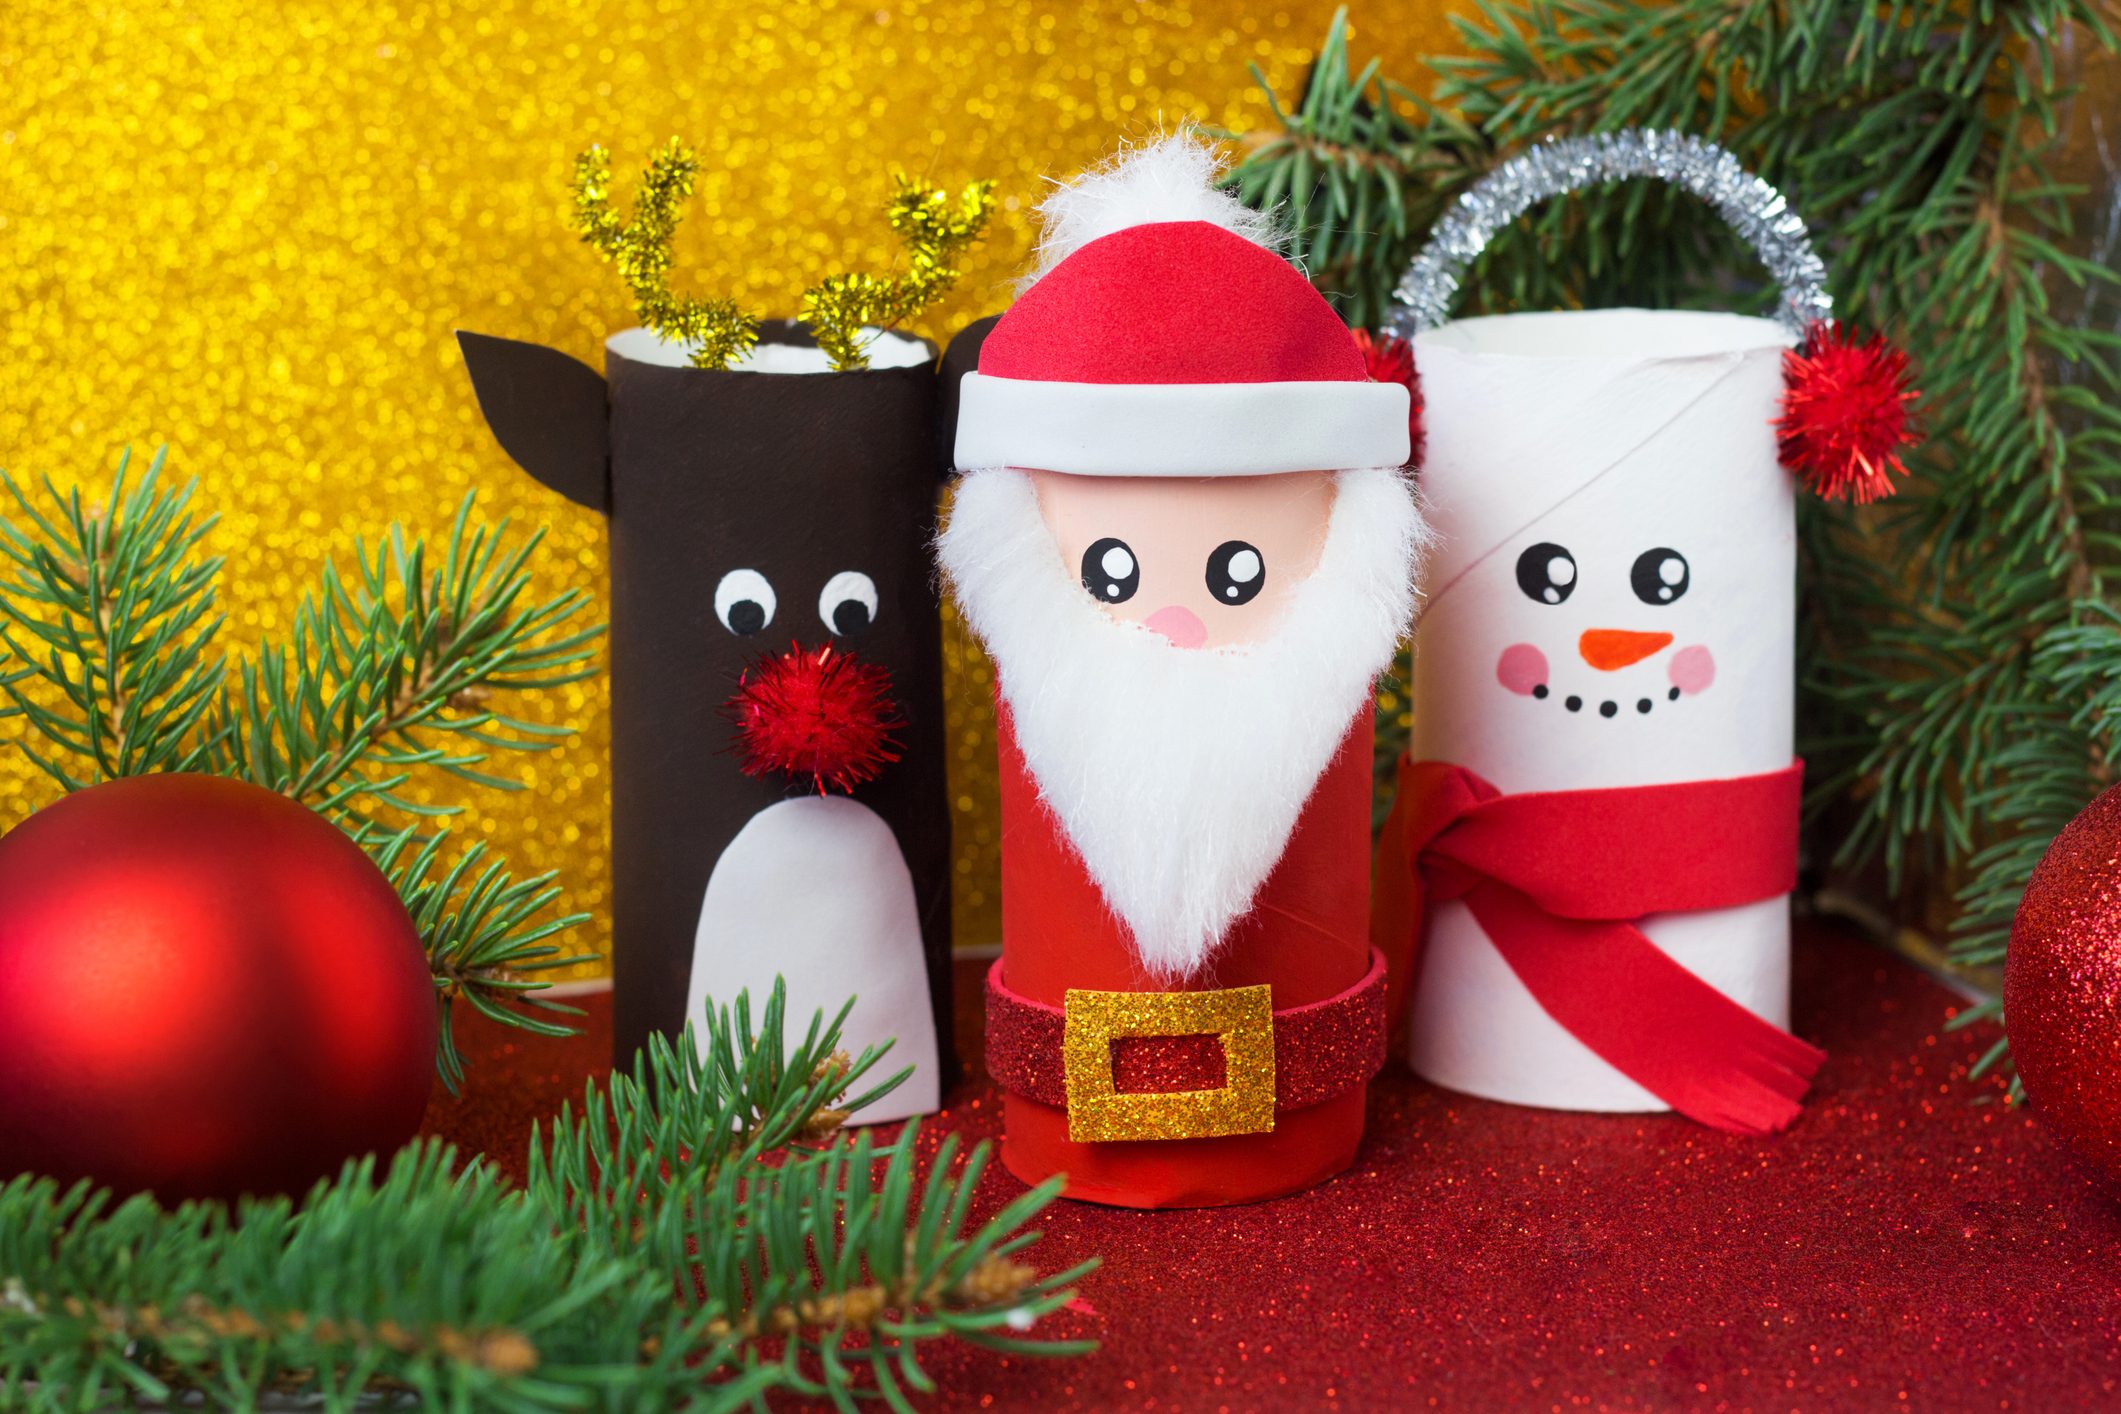 Christmas Santa Belt Plastic Cups SET OF 12 Holiday Party Gathering Decor